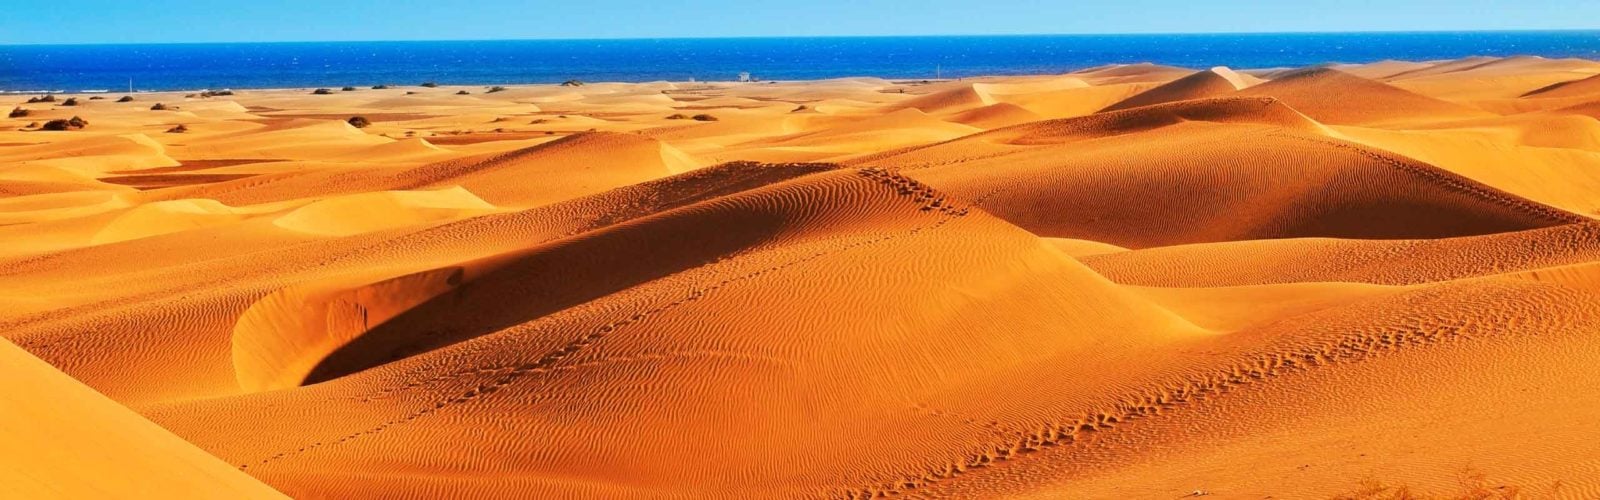 Desert landscape, Gran Canaria, The Canary Islands, Spain